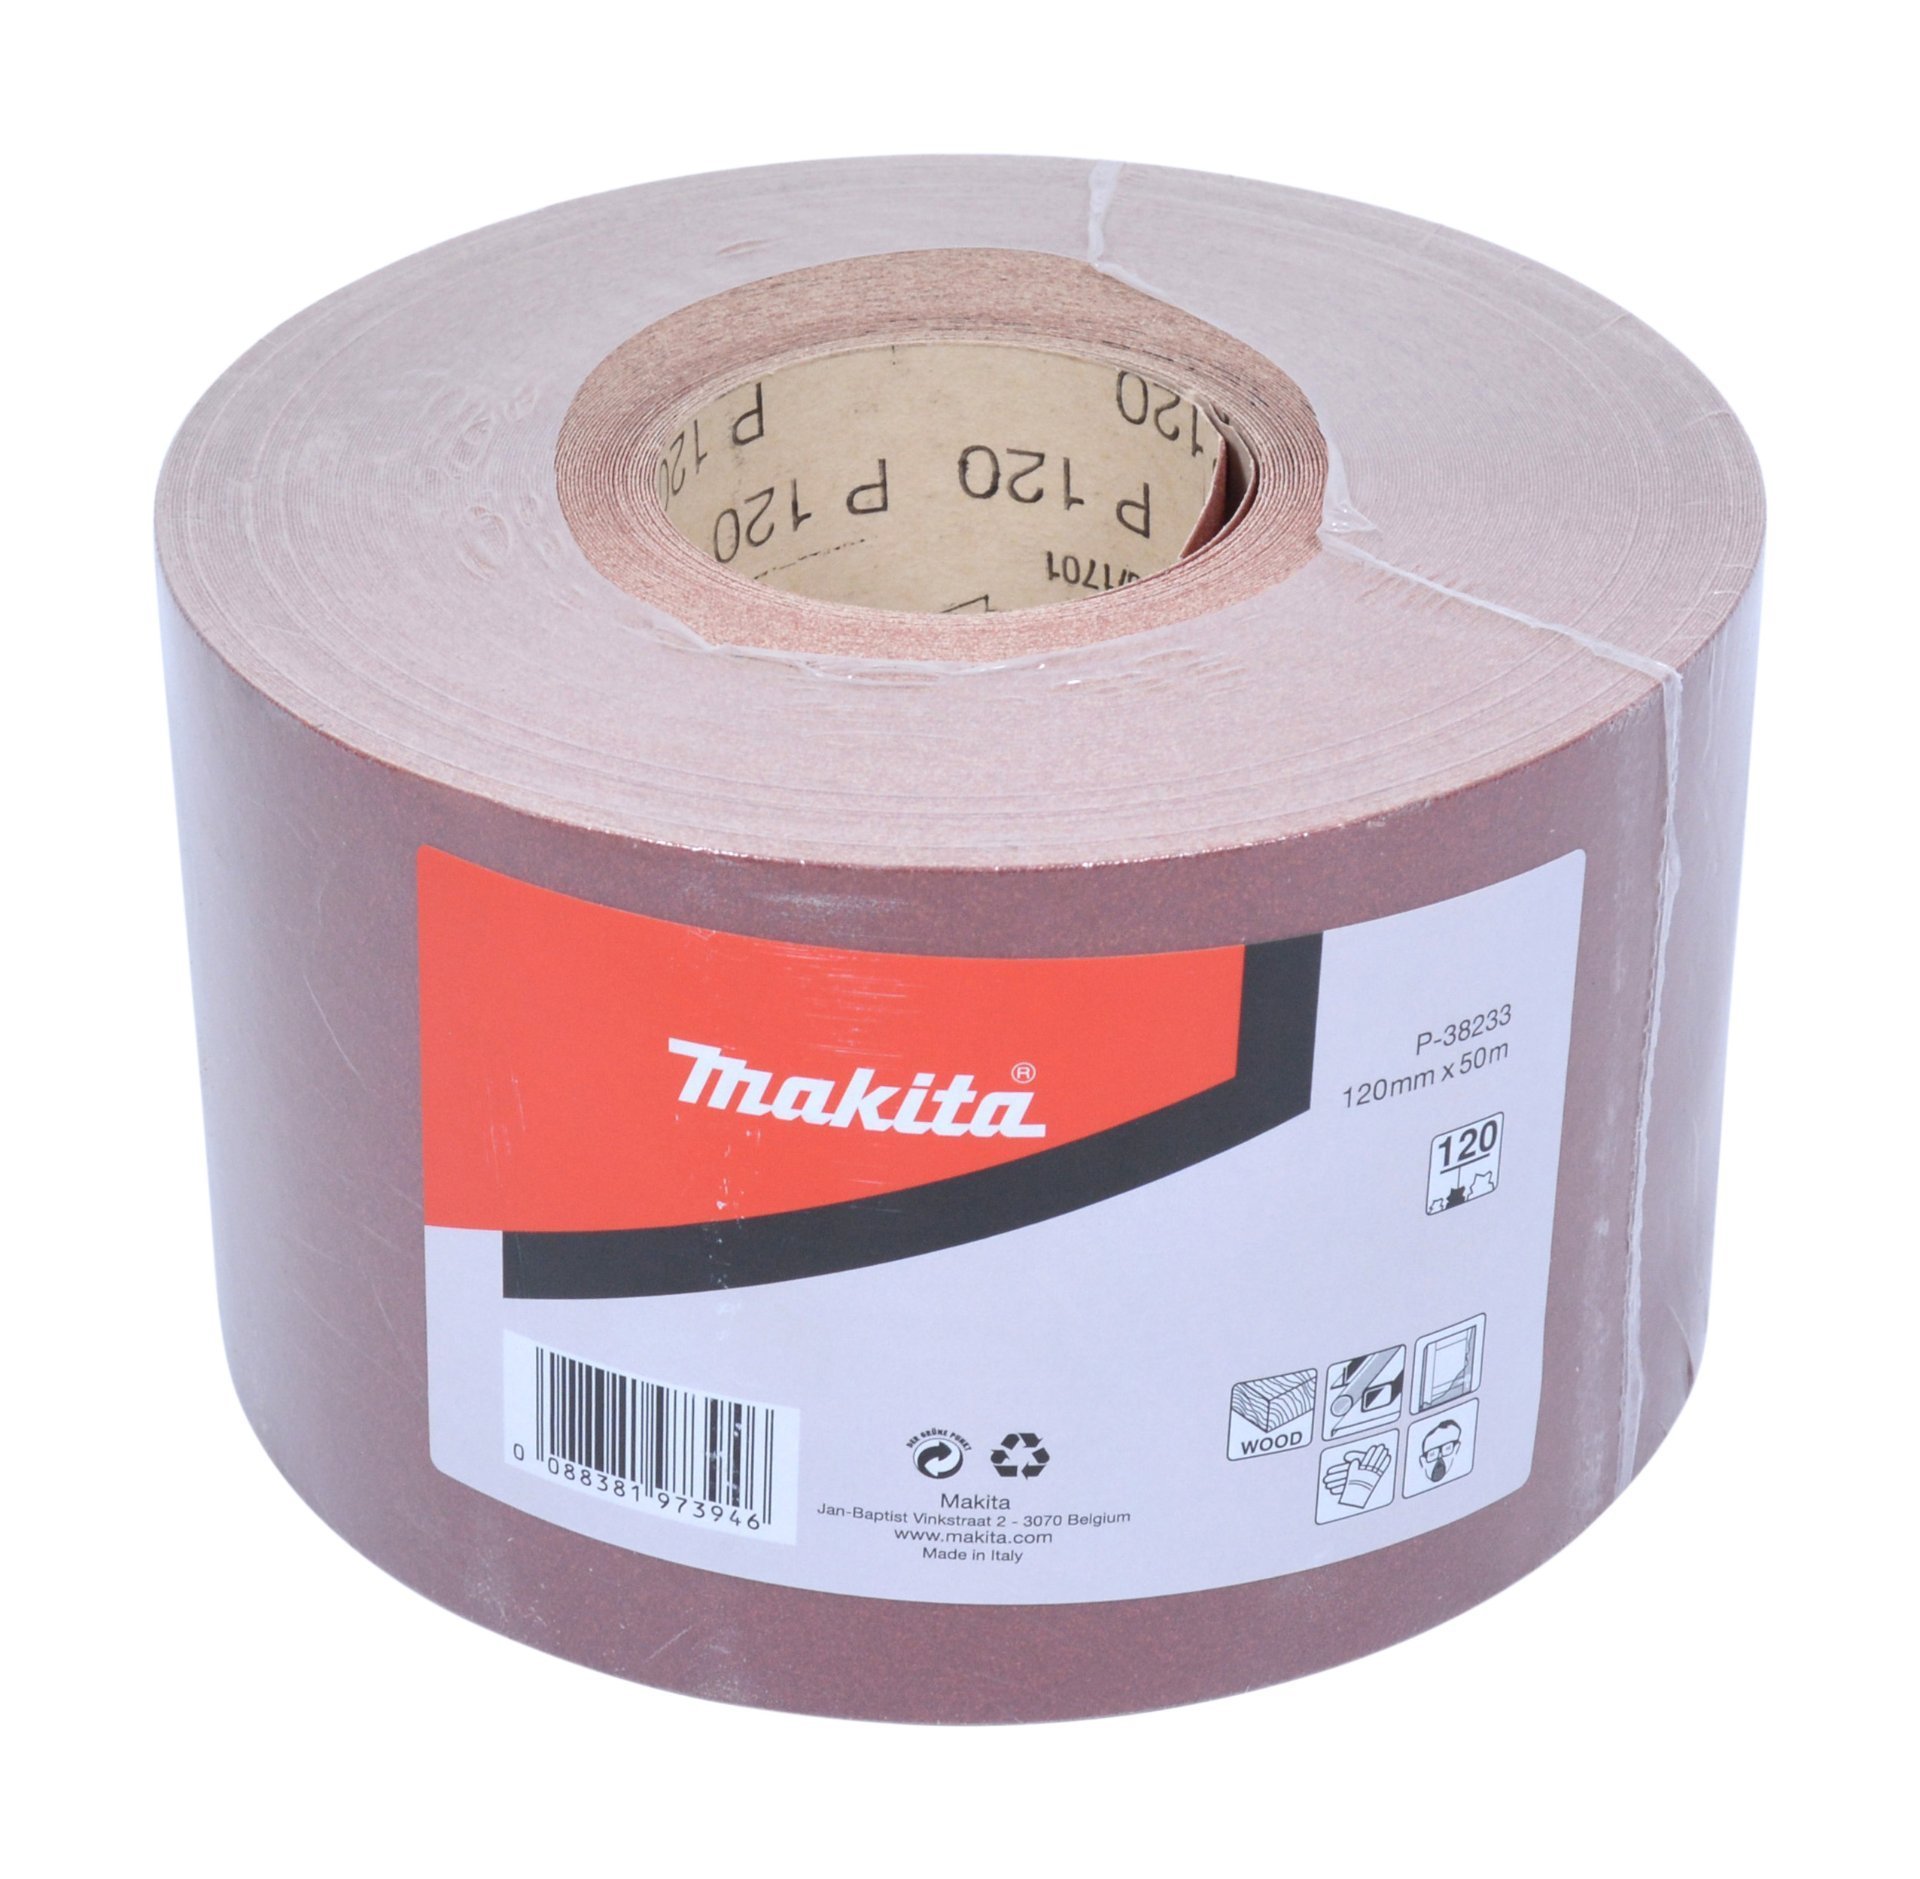 Makita Schleifpapier-Rolle P-38233